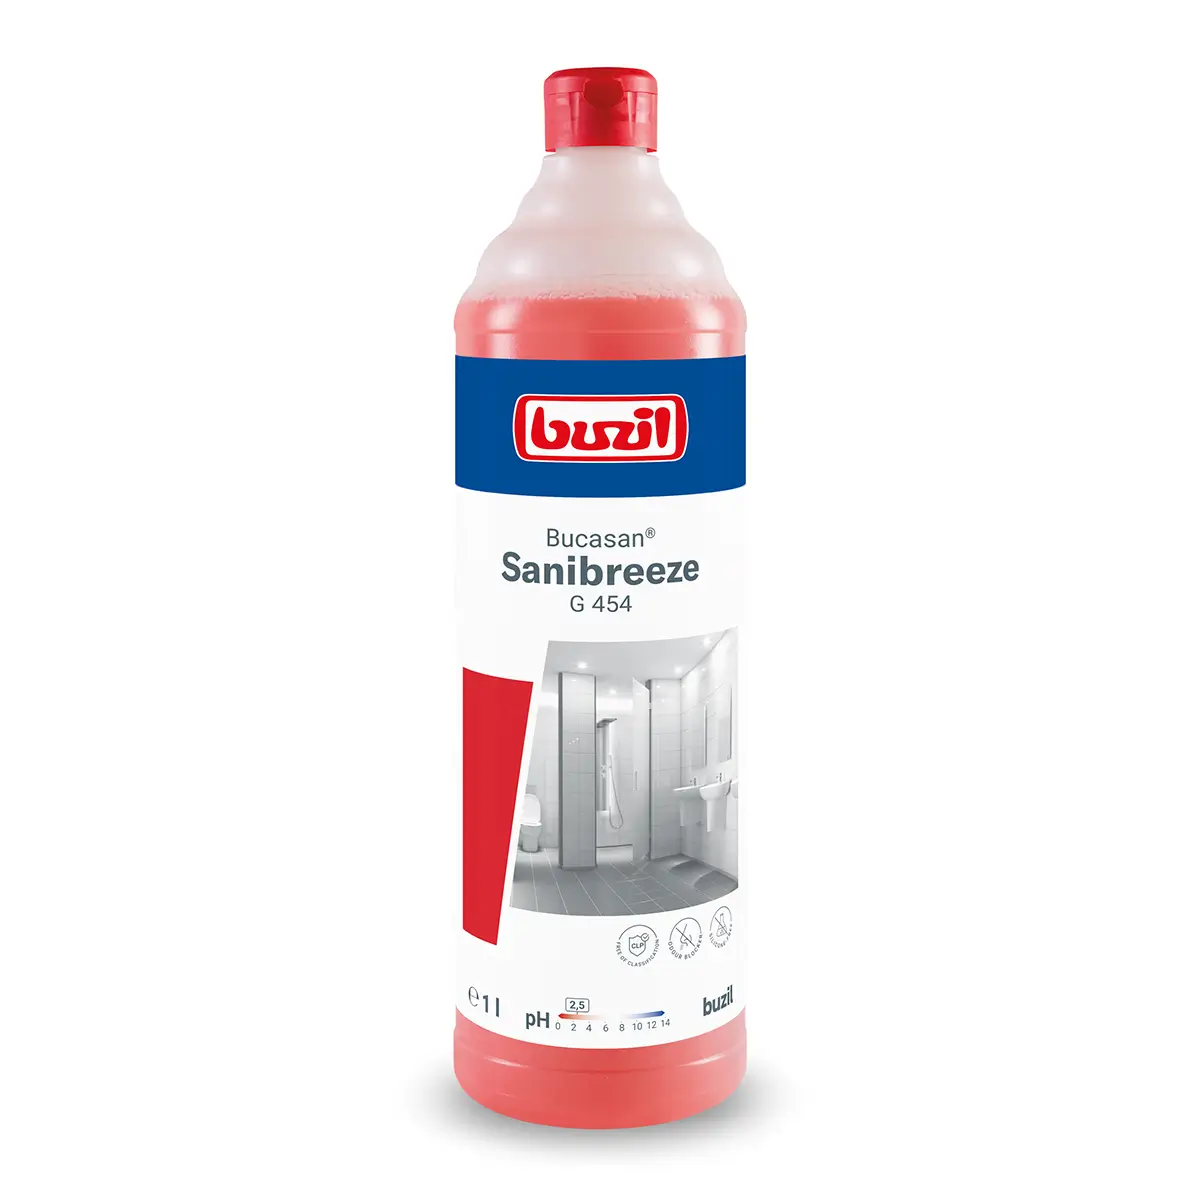 Buzil Bucasan Sanibreeze G454 Sanitärreiniger mit Geruchsblocker 1l